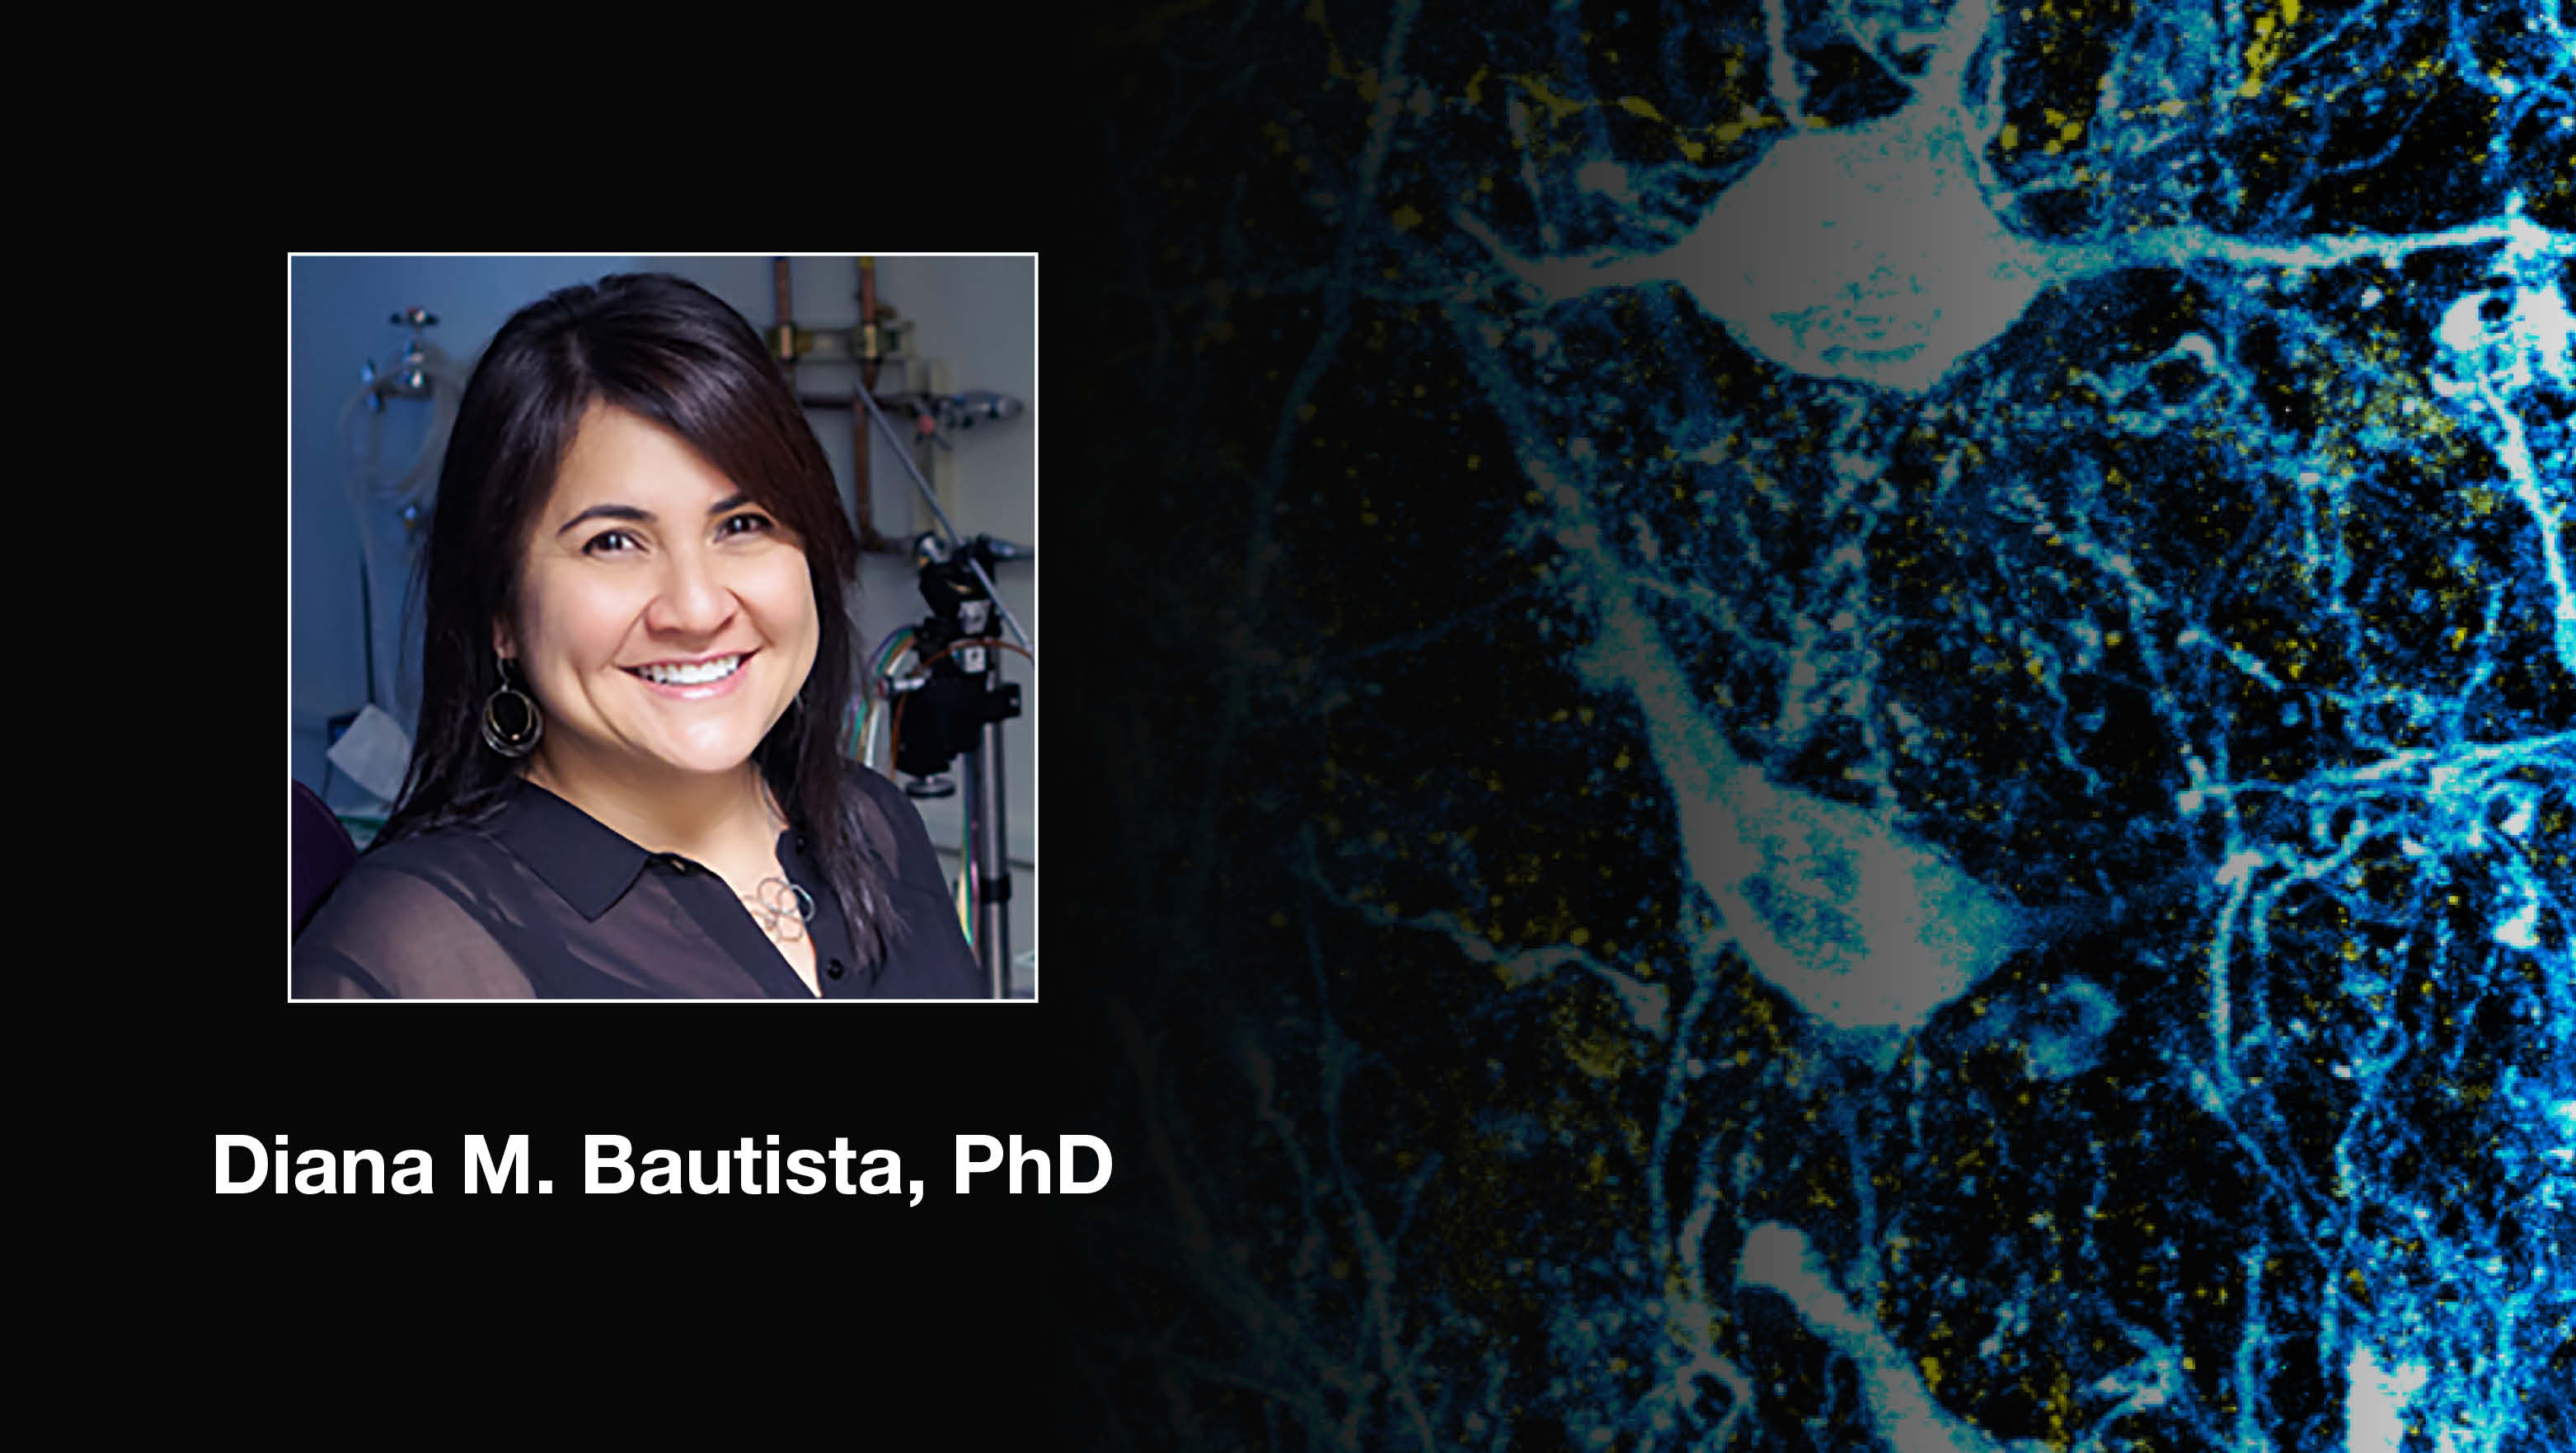 Headshot of Diana M Bautista over a scientific image